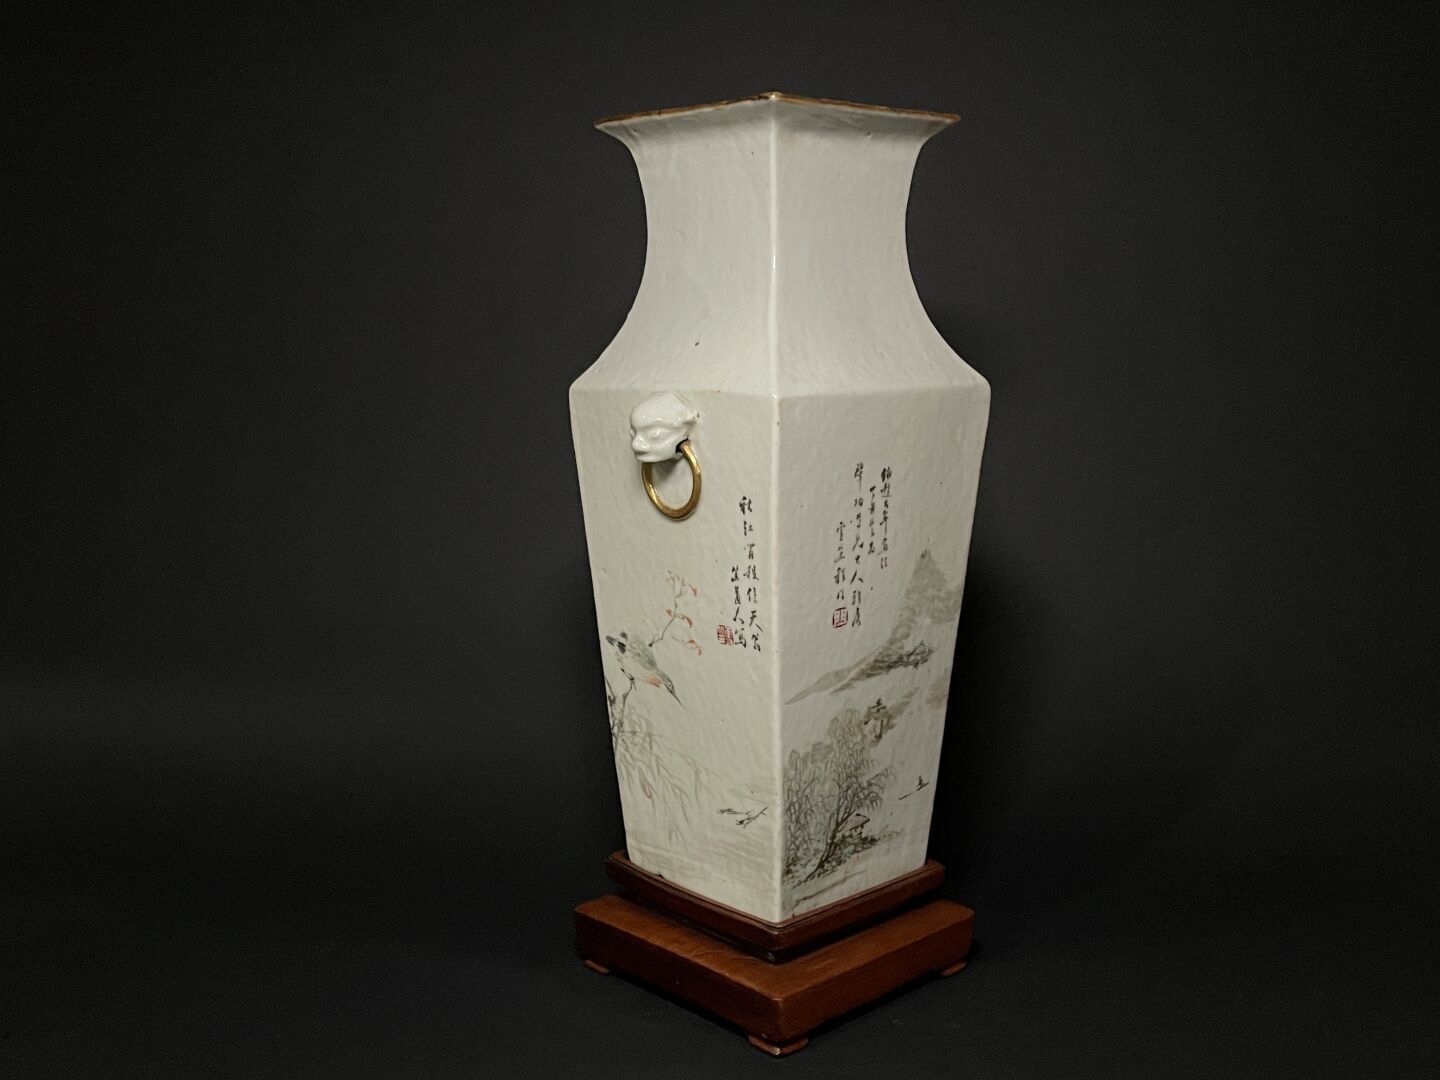 Null 中国。
瓷质阳台花瓶，装饰有山水和文字，木质底座。 
H.44厘米。 
底部有穿孔，颈部有缺损